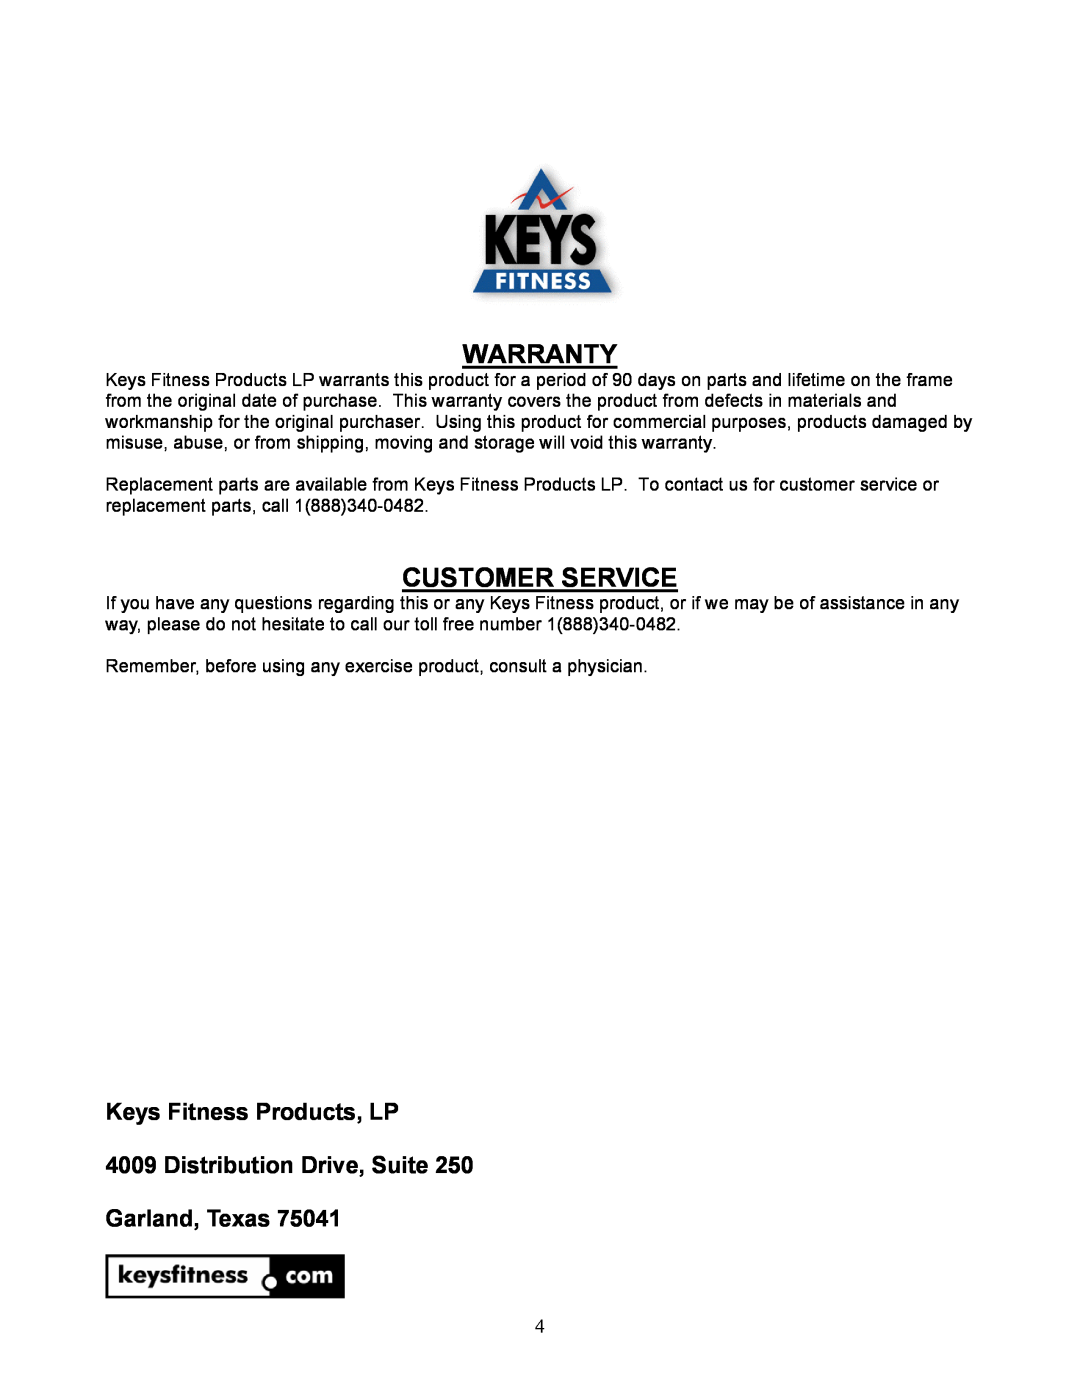 Keys Fitness ST-DB4 Warranty, Customer Service, Keys Fitness Products, LP 4009 Distribution Drive, Suite, Garland, Texas 